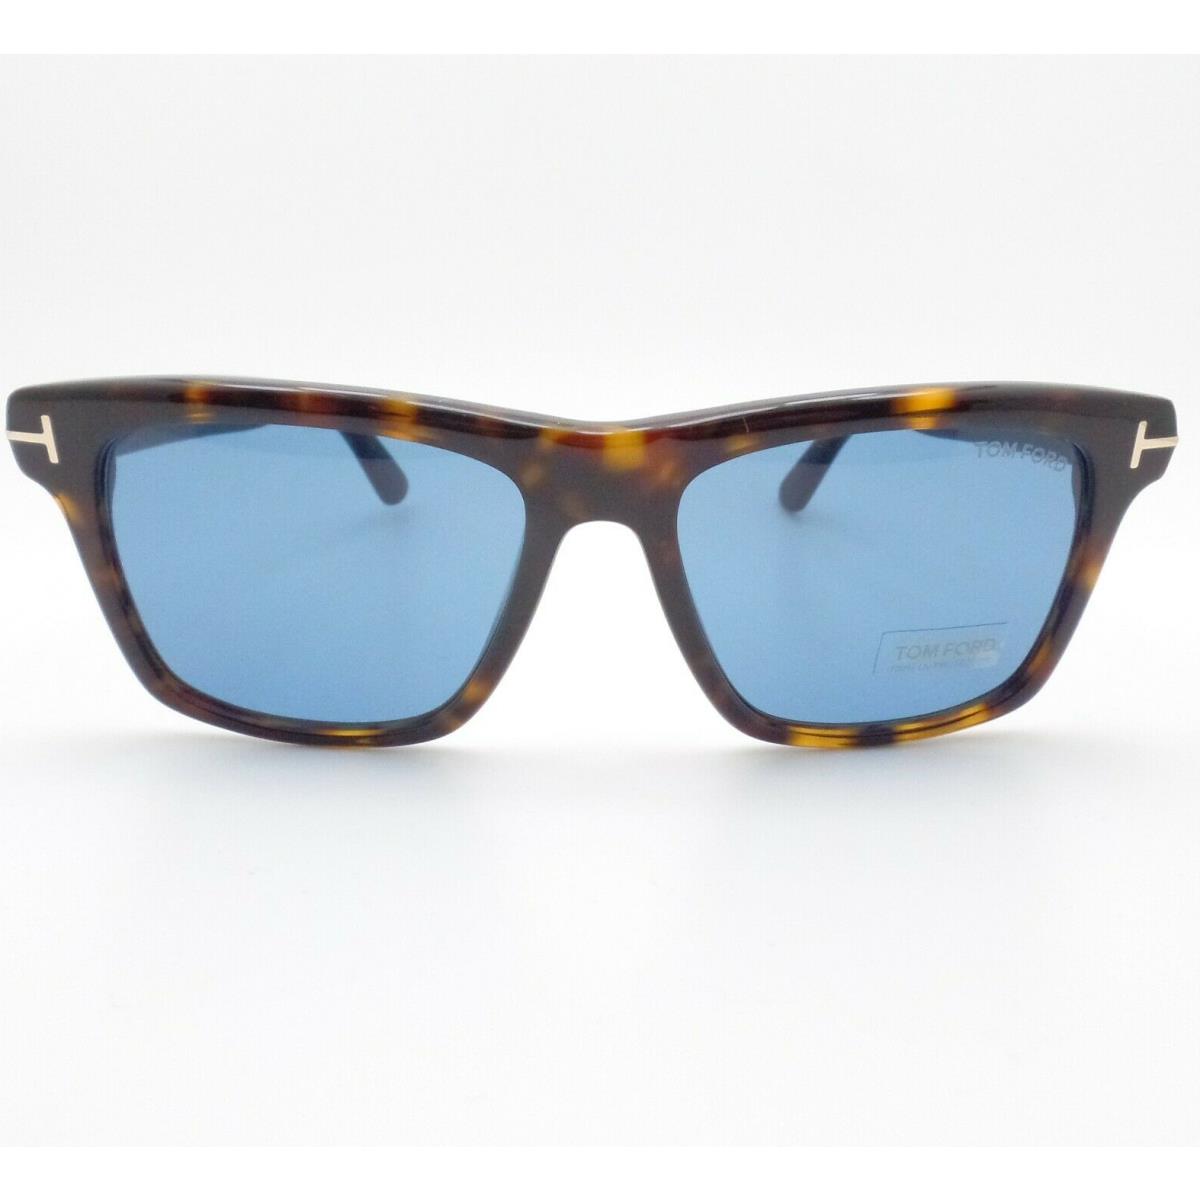 Tom Ford sunglasses  - Shiny Classic Dark Havana Frame, Blue Lens 0